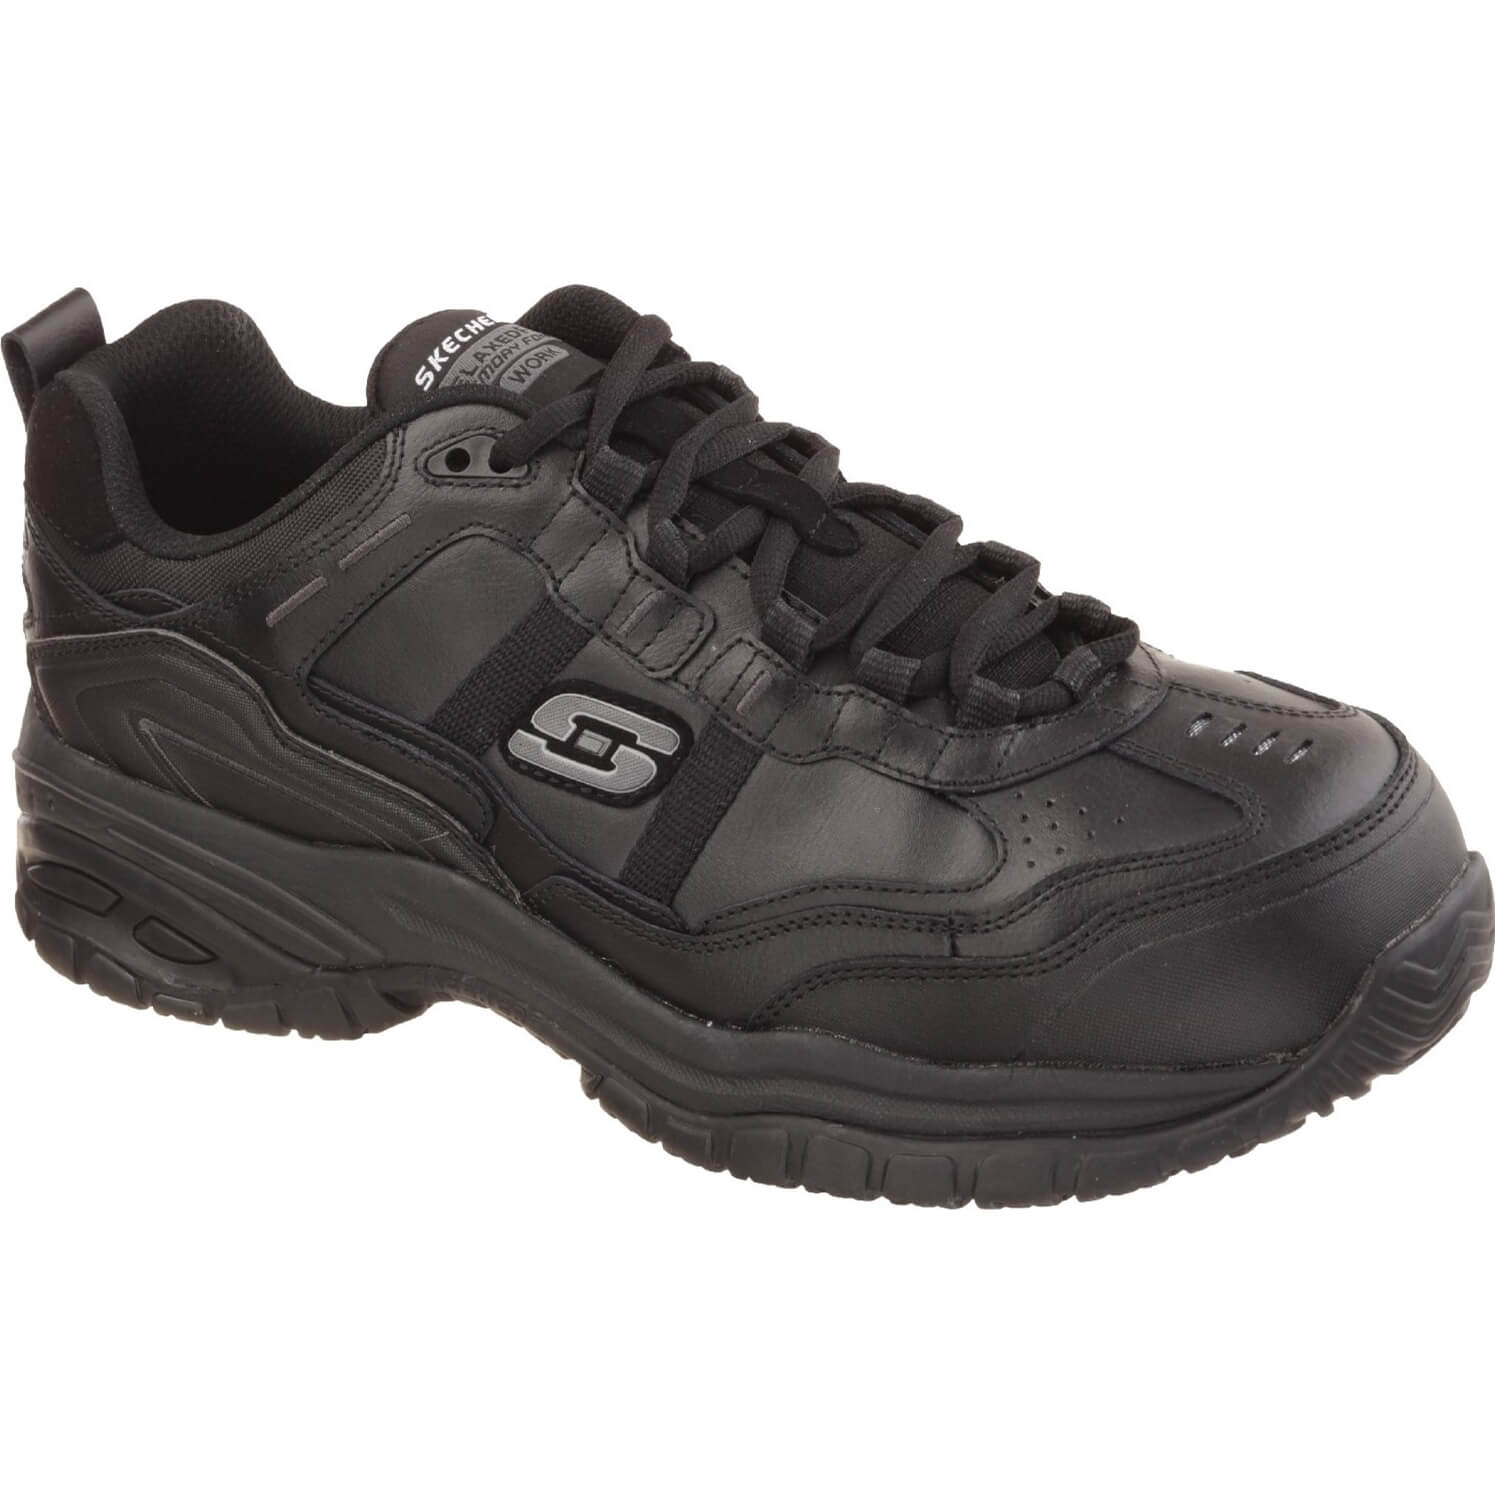 Skechers Work Soft Stride Grinnell Safety Shoe Black Size 8